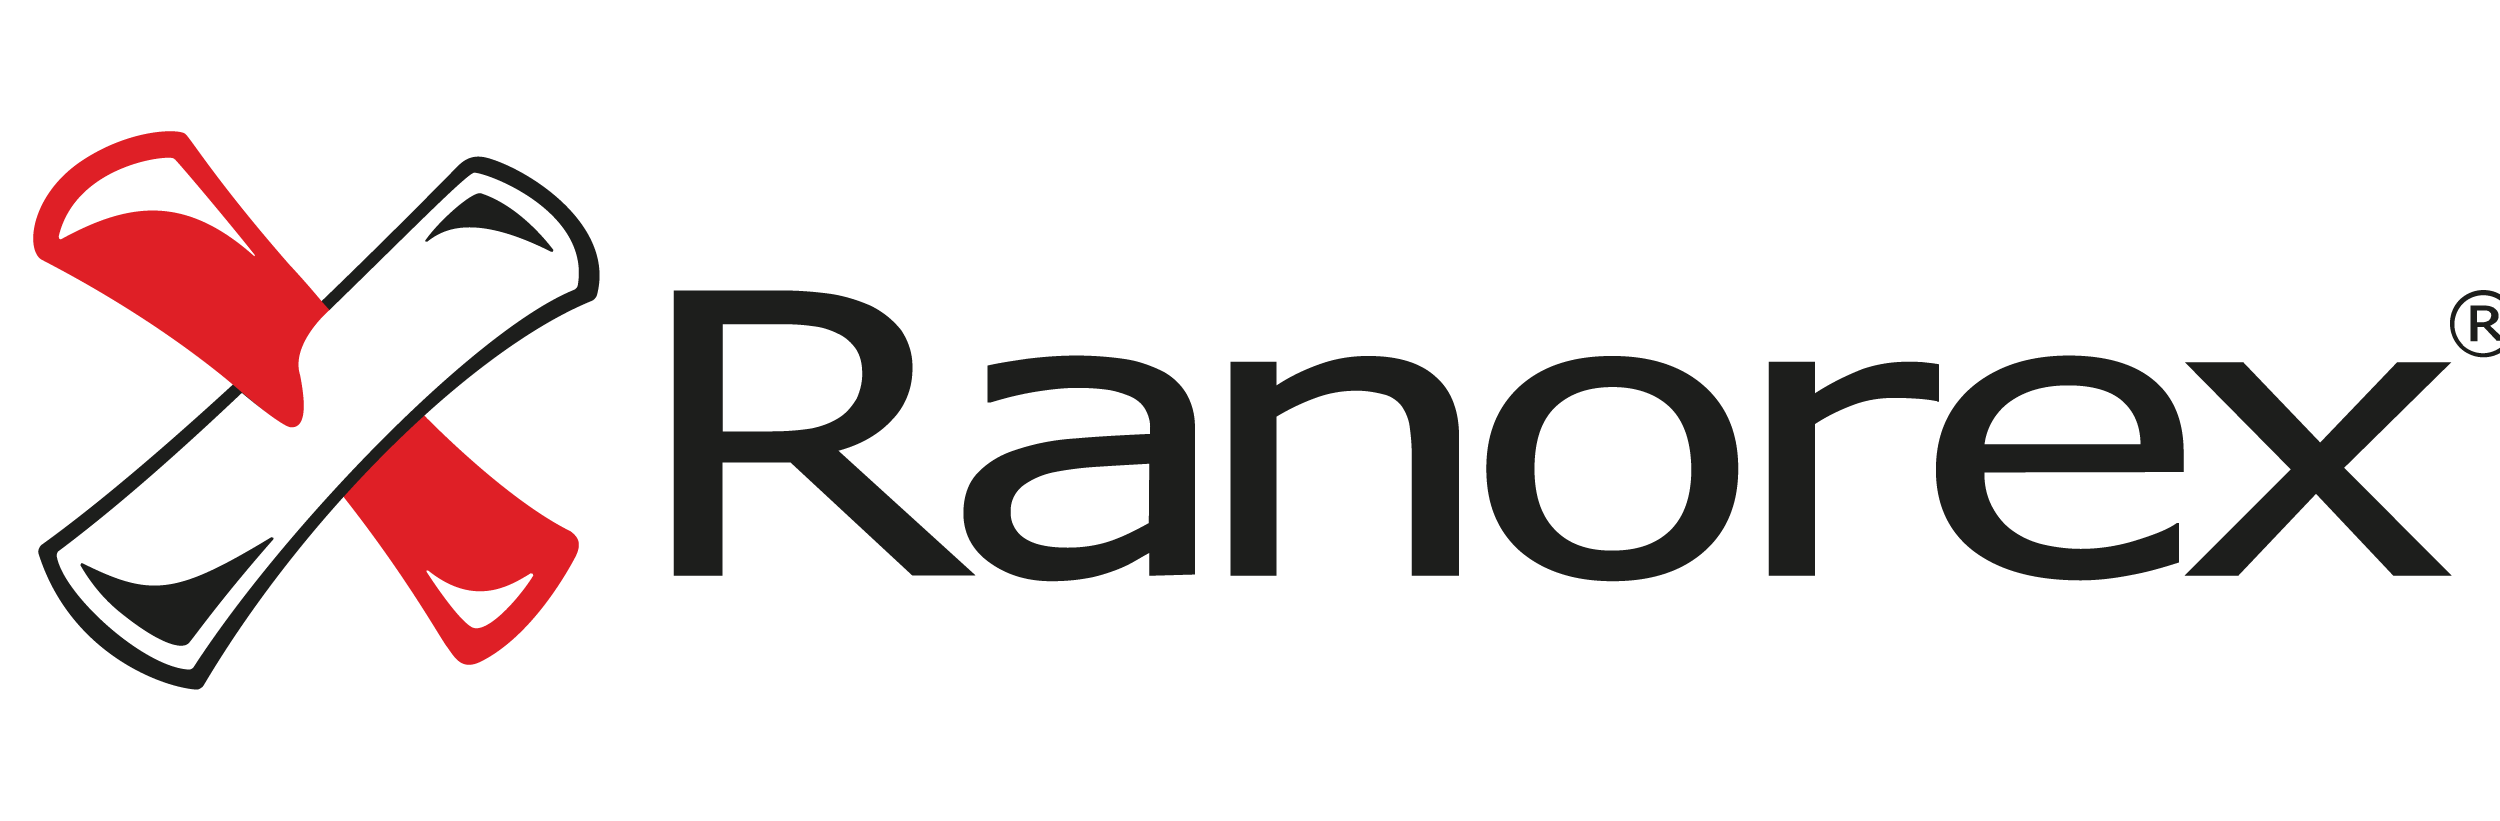 Ranorex 600px 02 Kiuwan Code Security